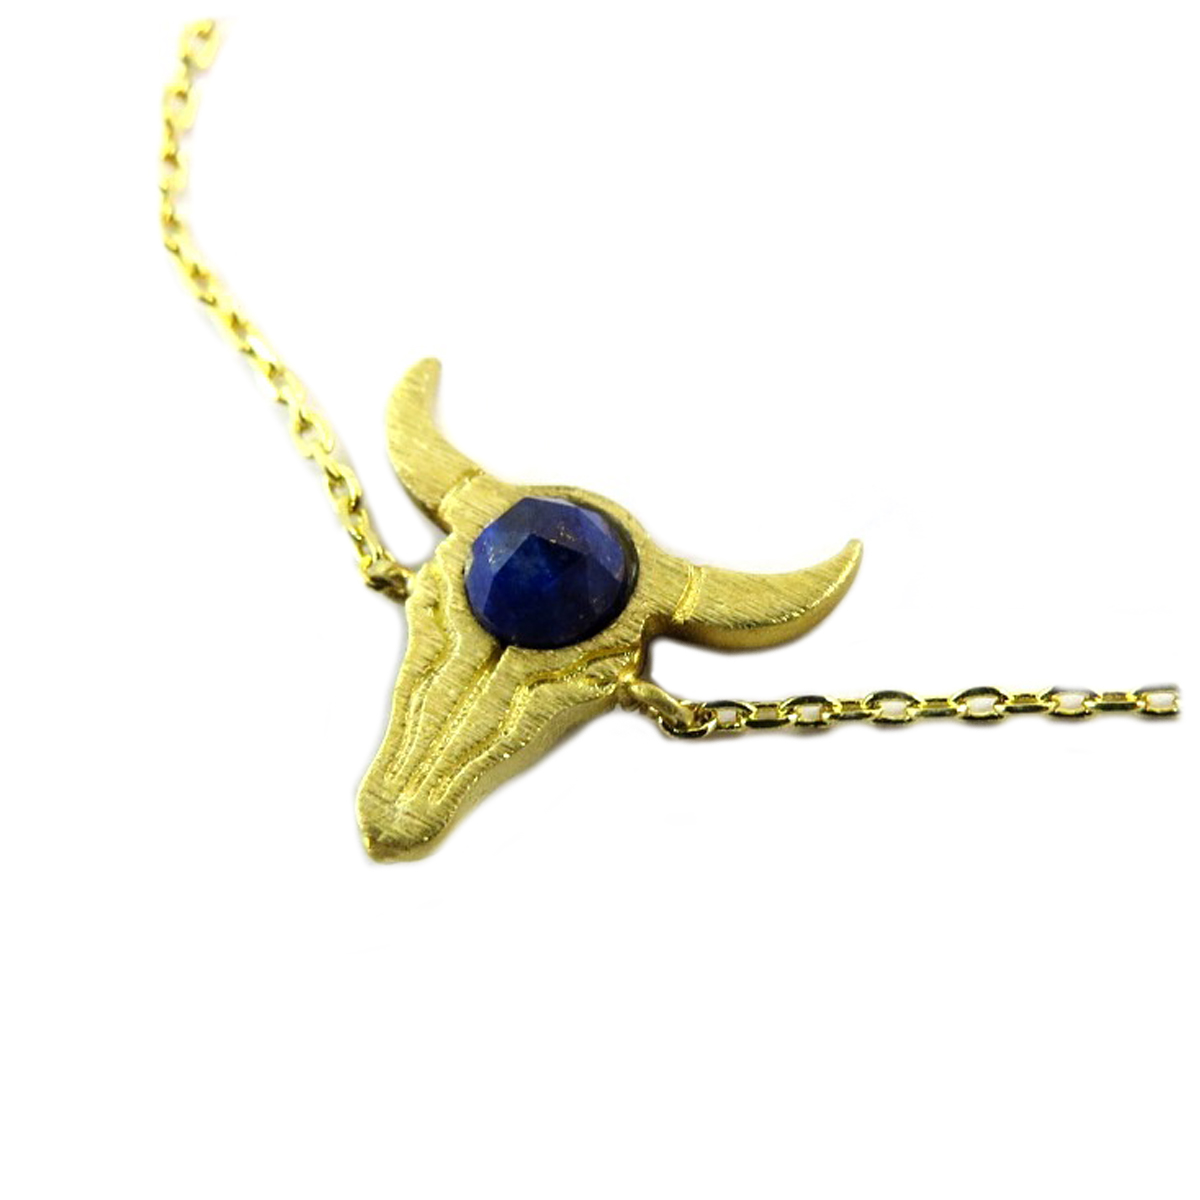 Bracelet artisanal \'Boho\' bleu doré (crâne de bison) - 14x14 mm - [Q0980]